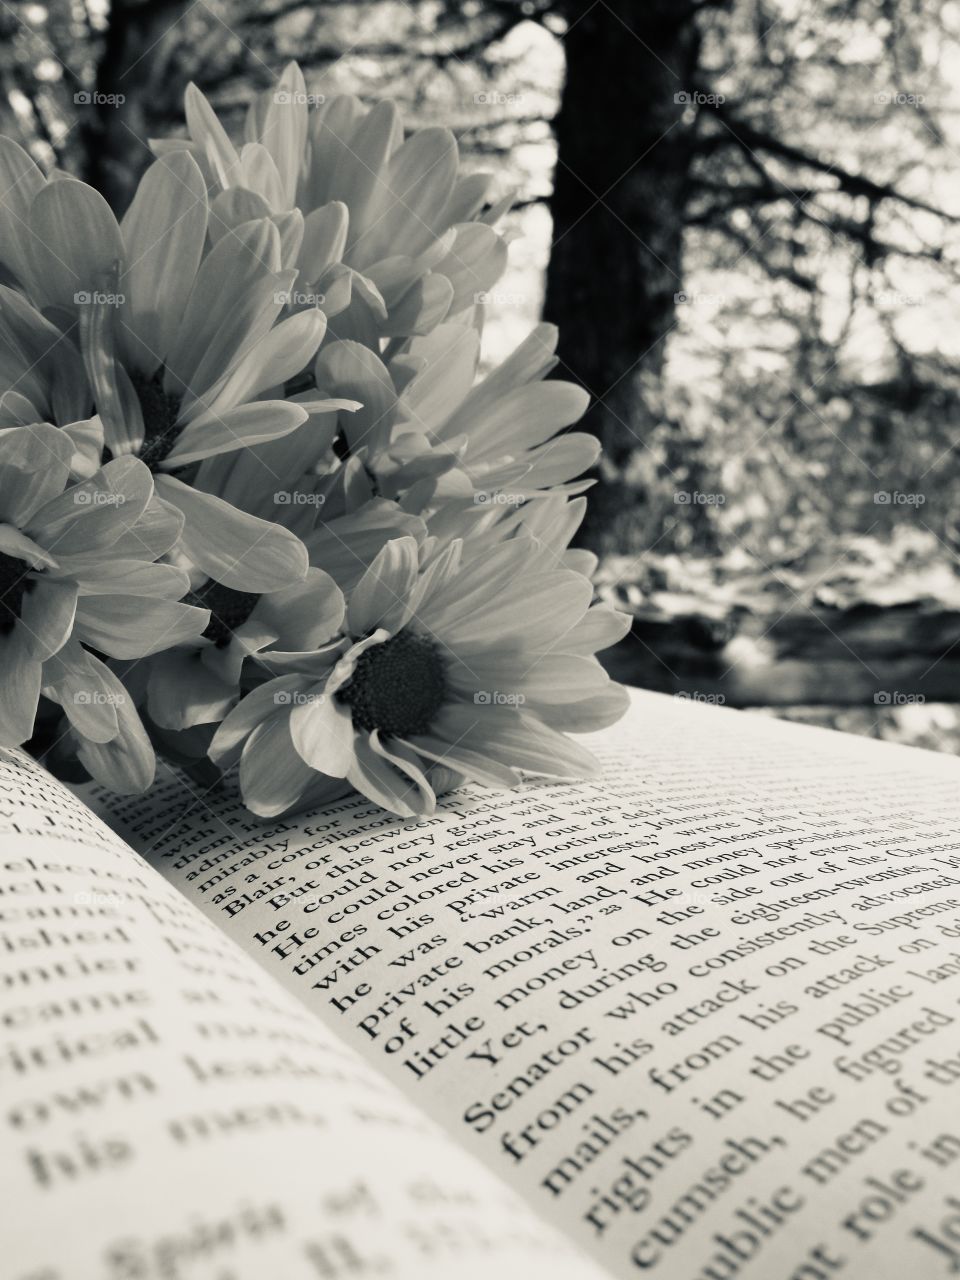 Daffodils on a book